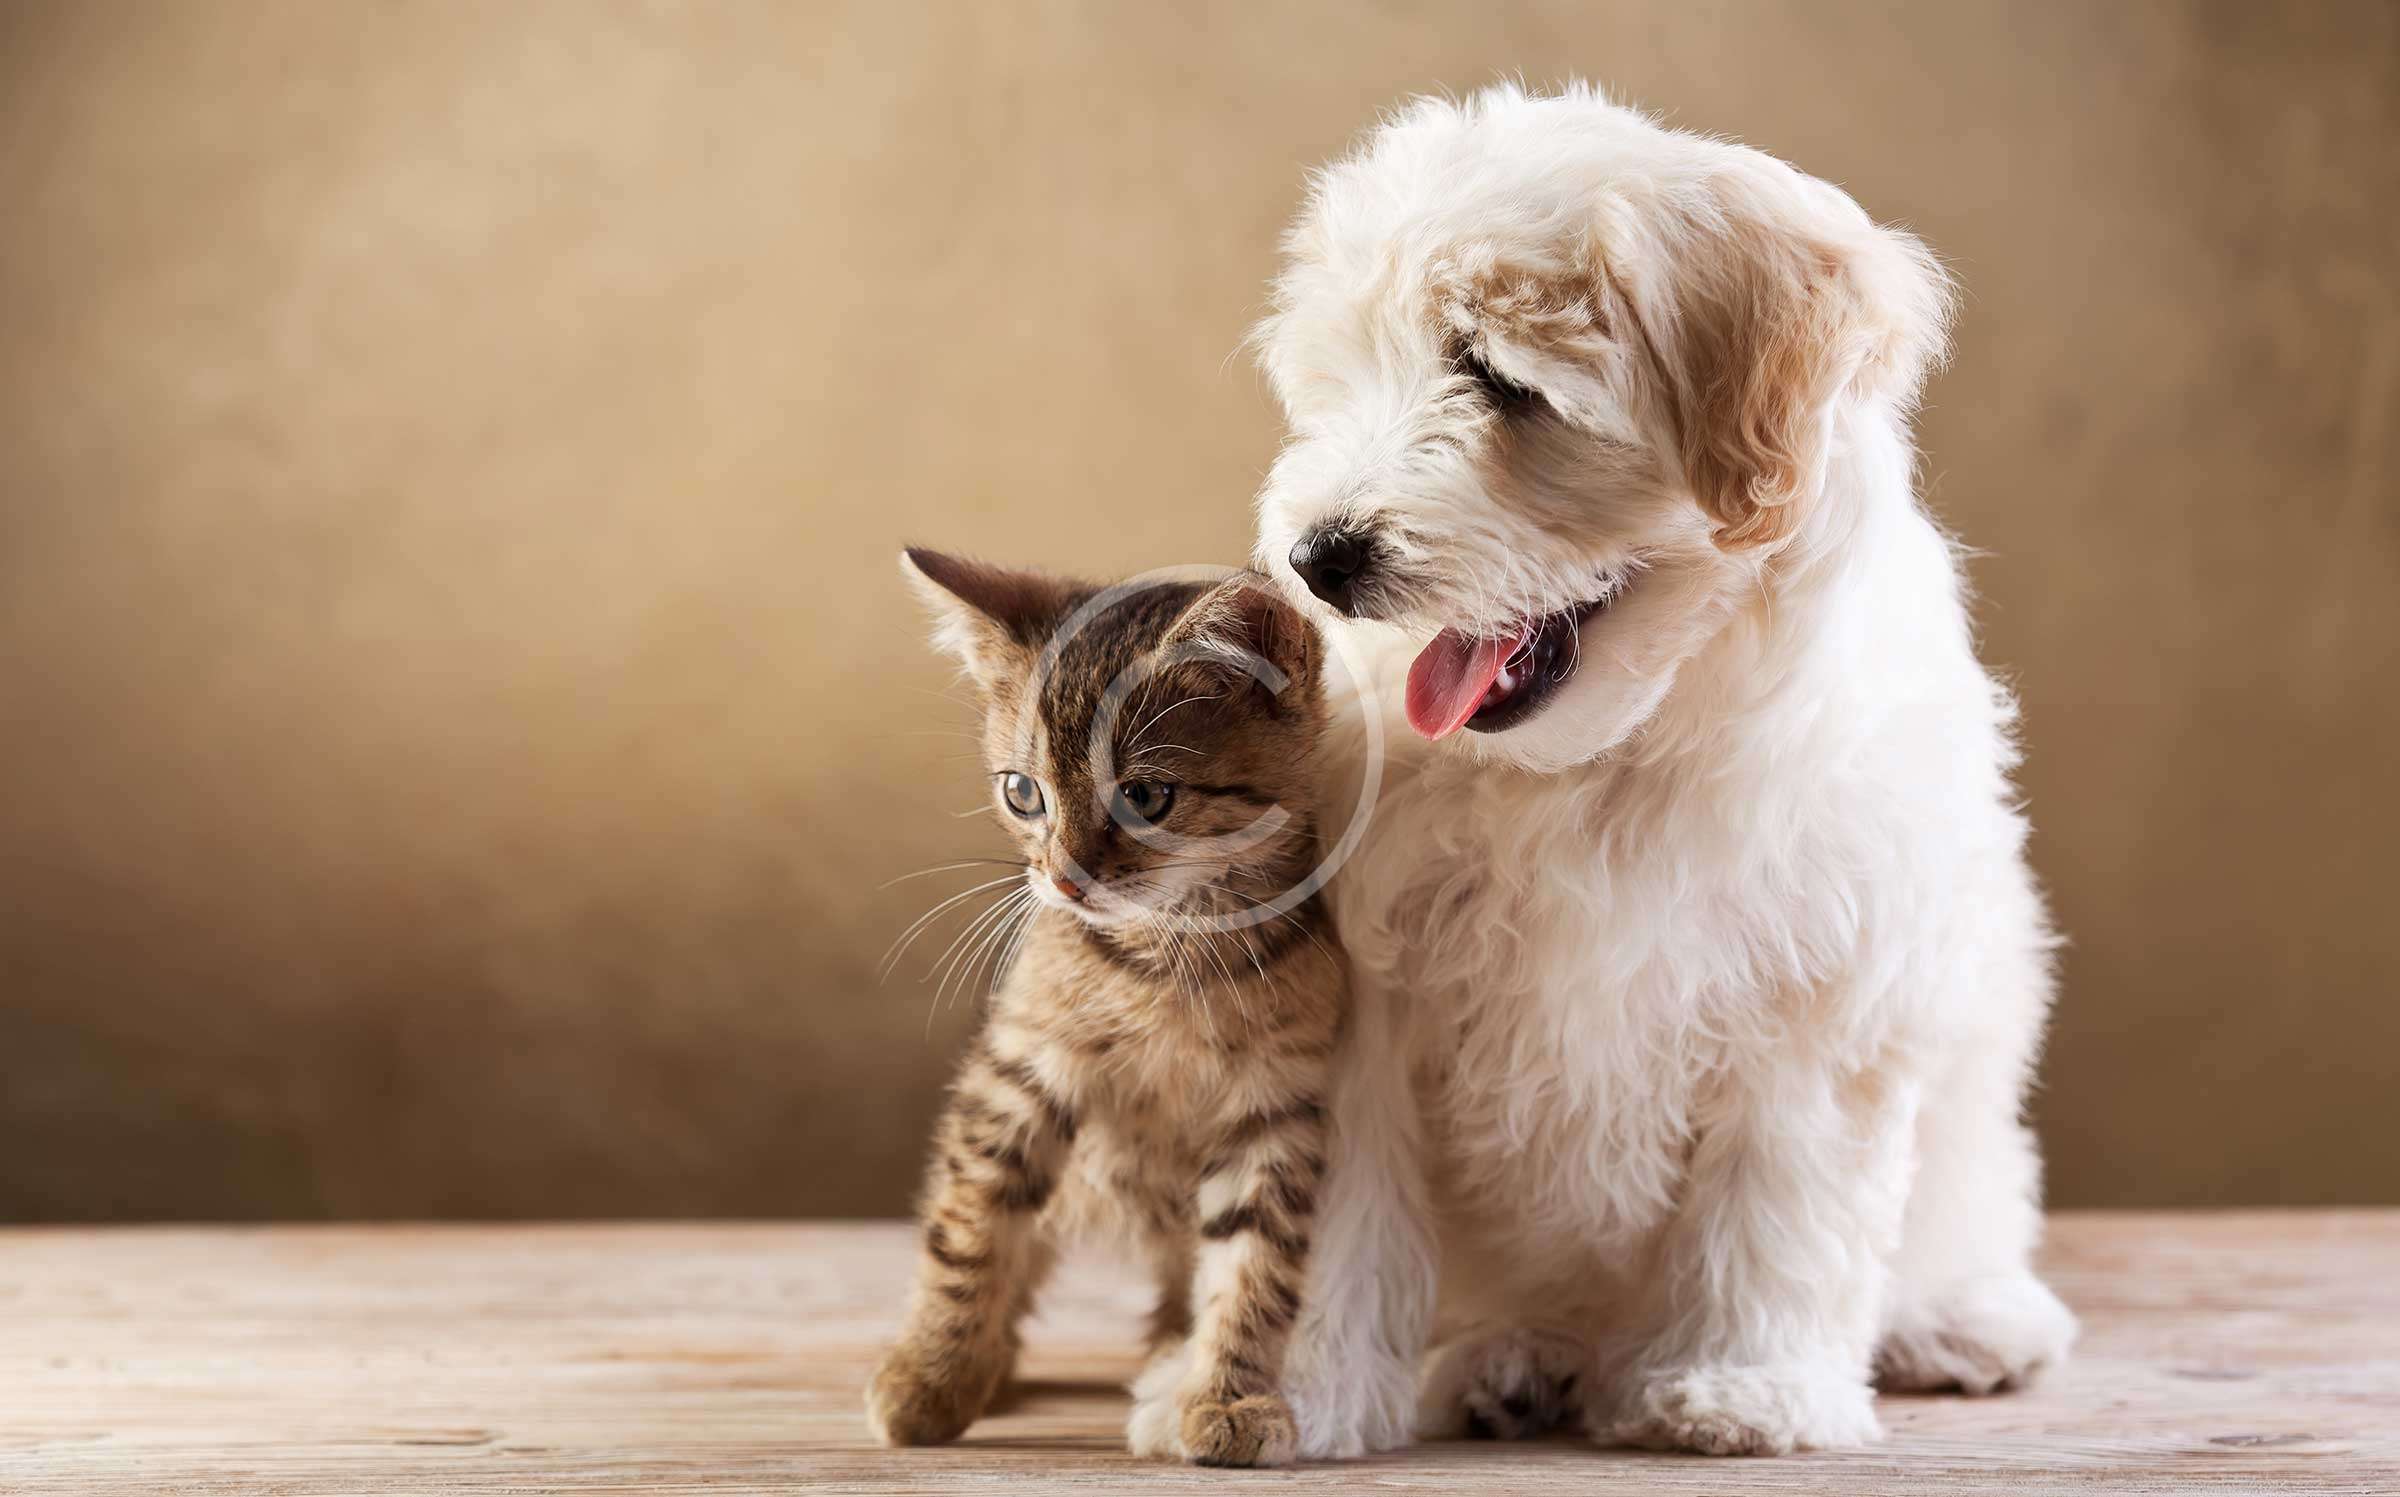 Best pet friends. Пушистые кошки и собаки. Кошка и собака вместе груминг. Кошка и собака Welcome. Pets are friends.